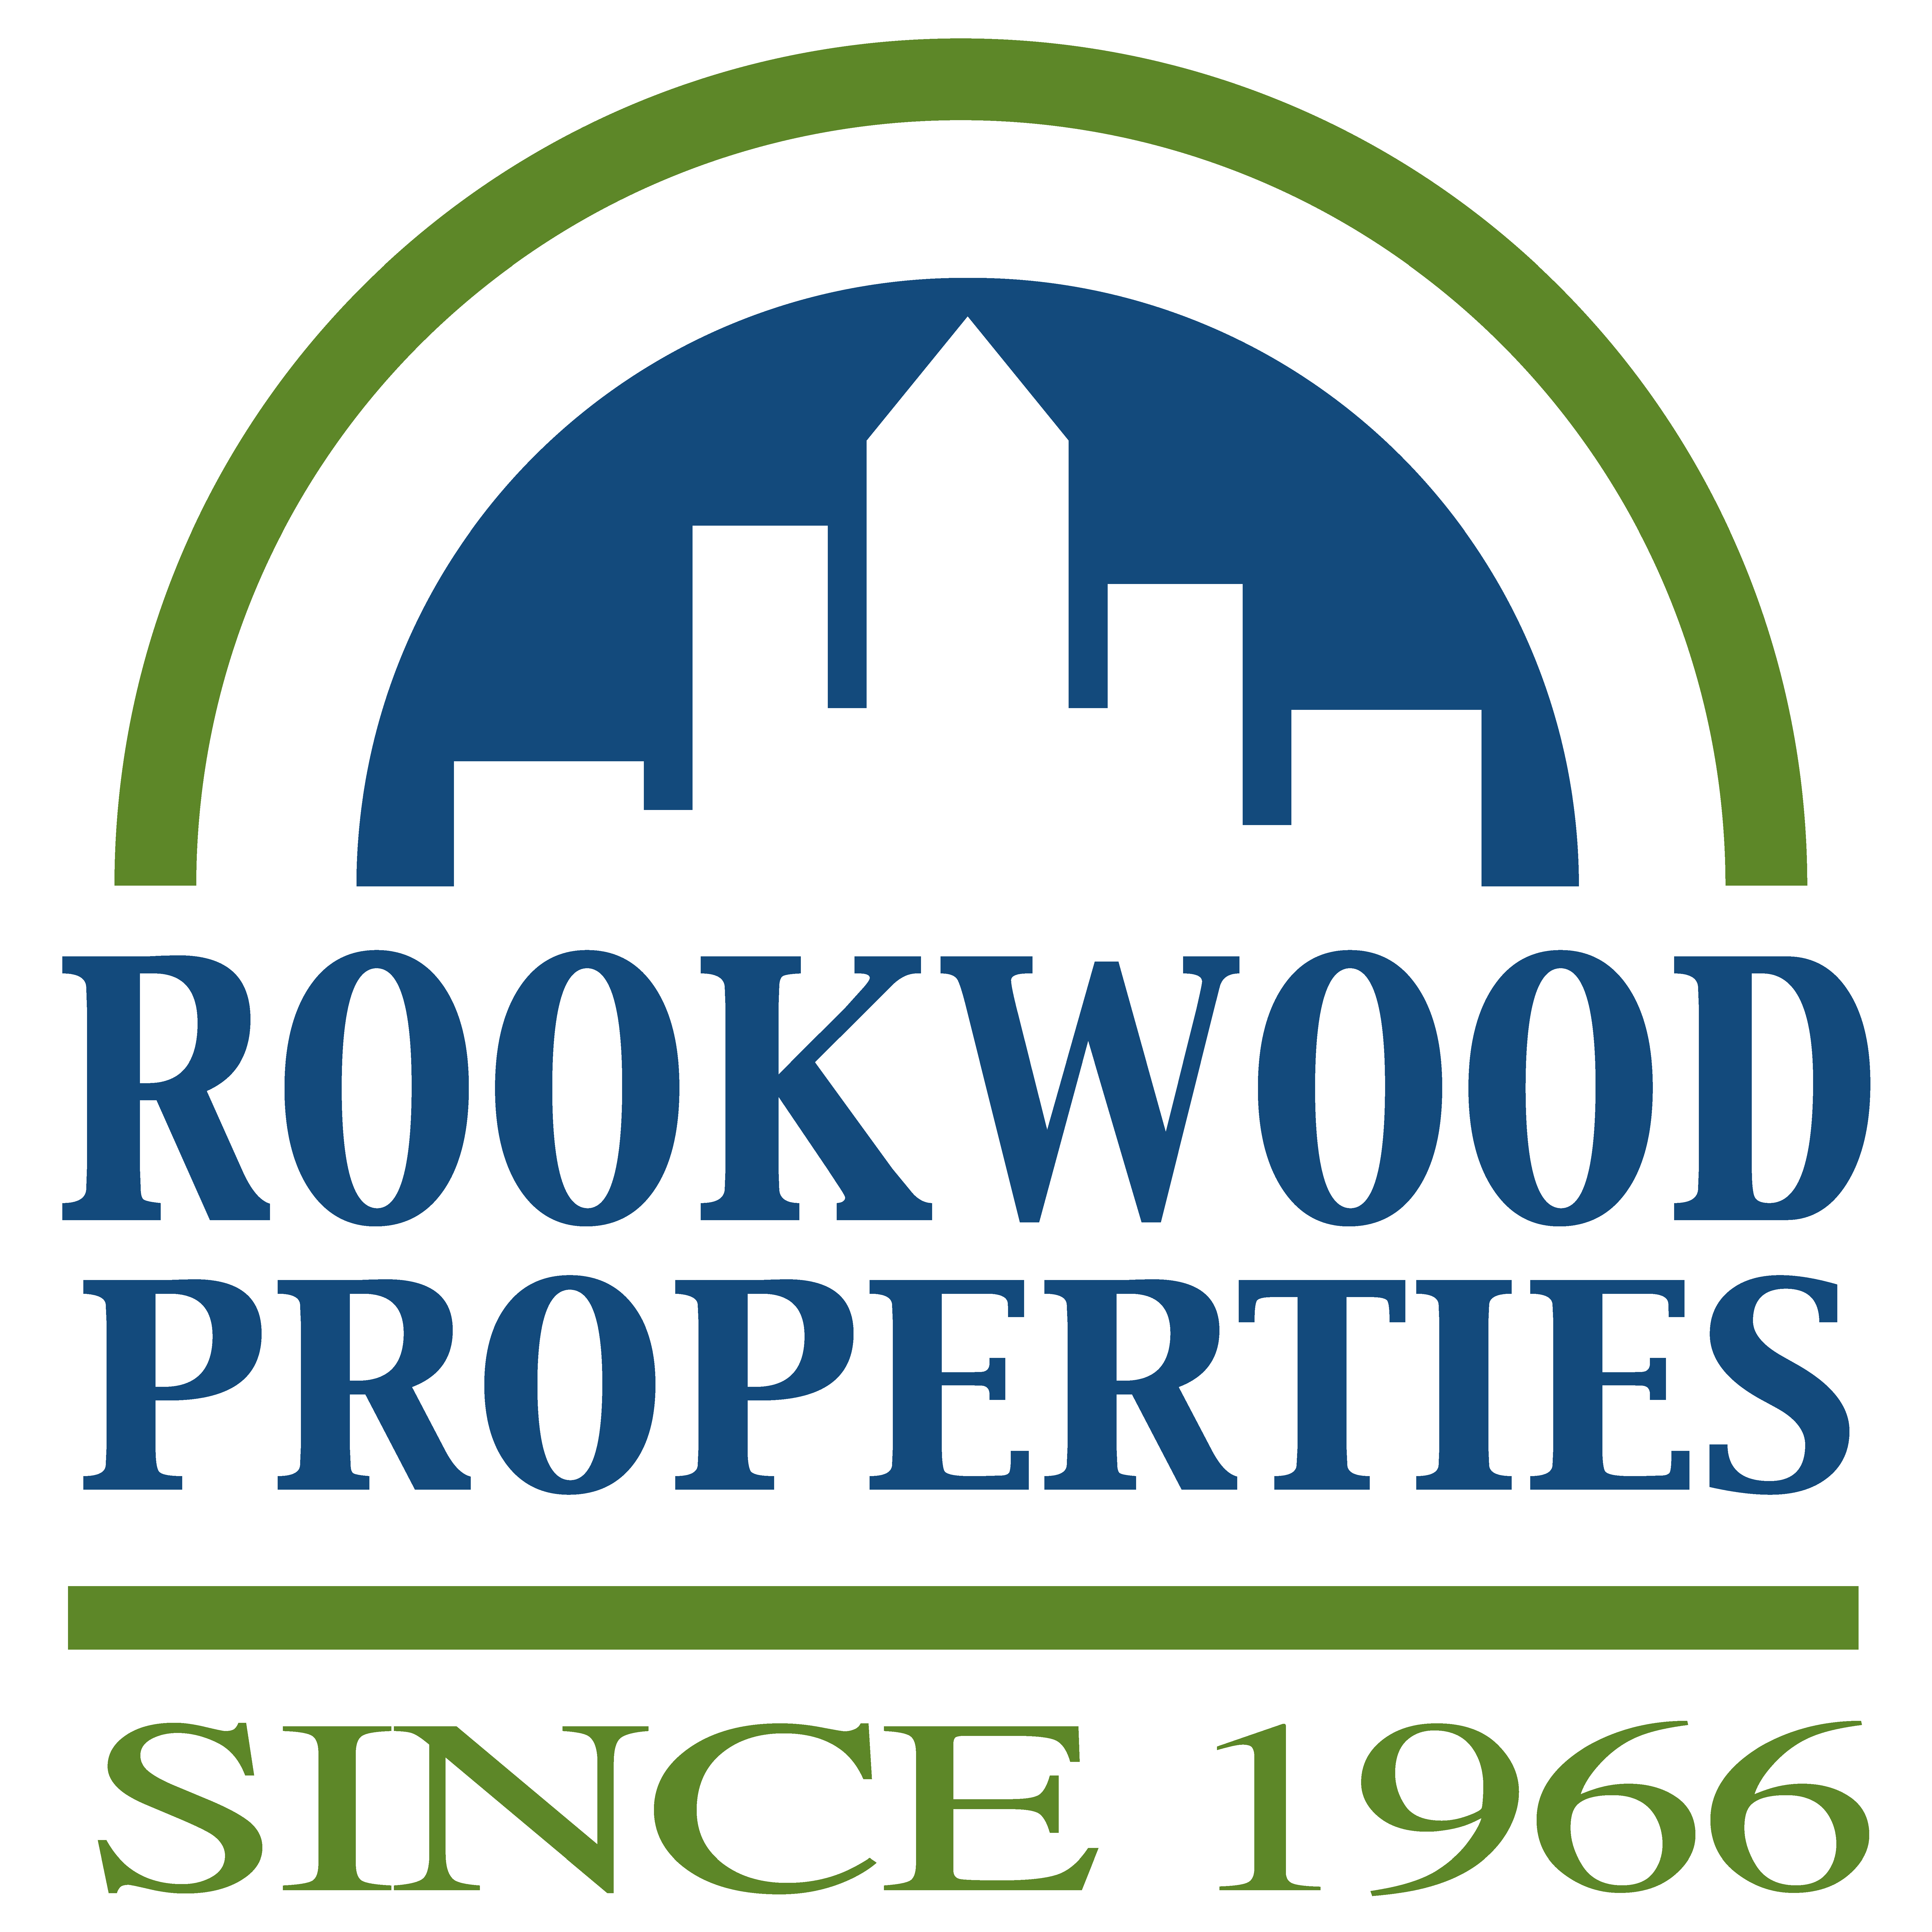 Rookwood Properties logo